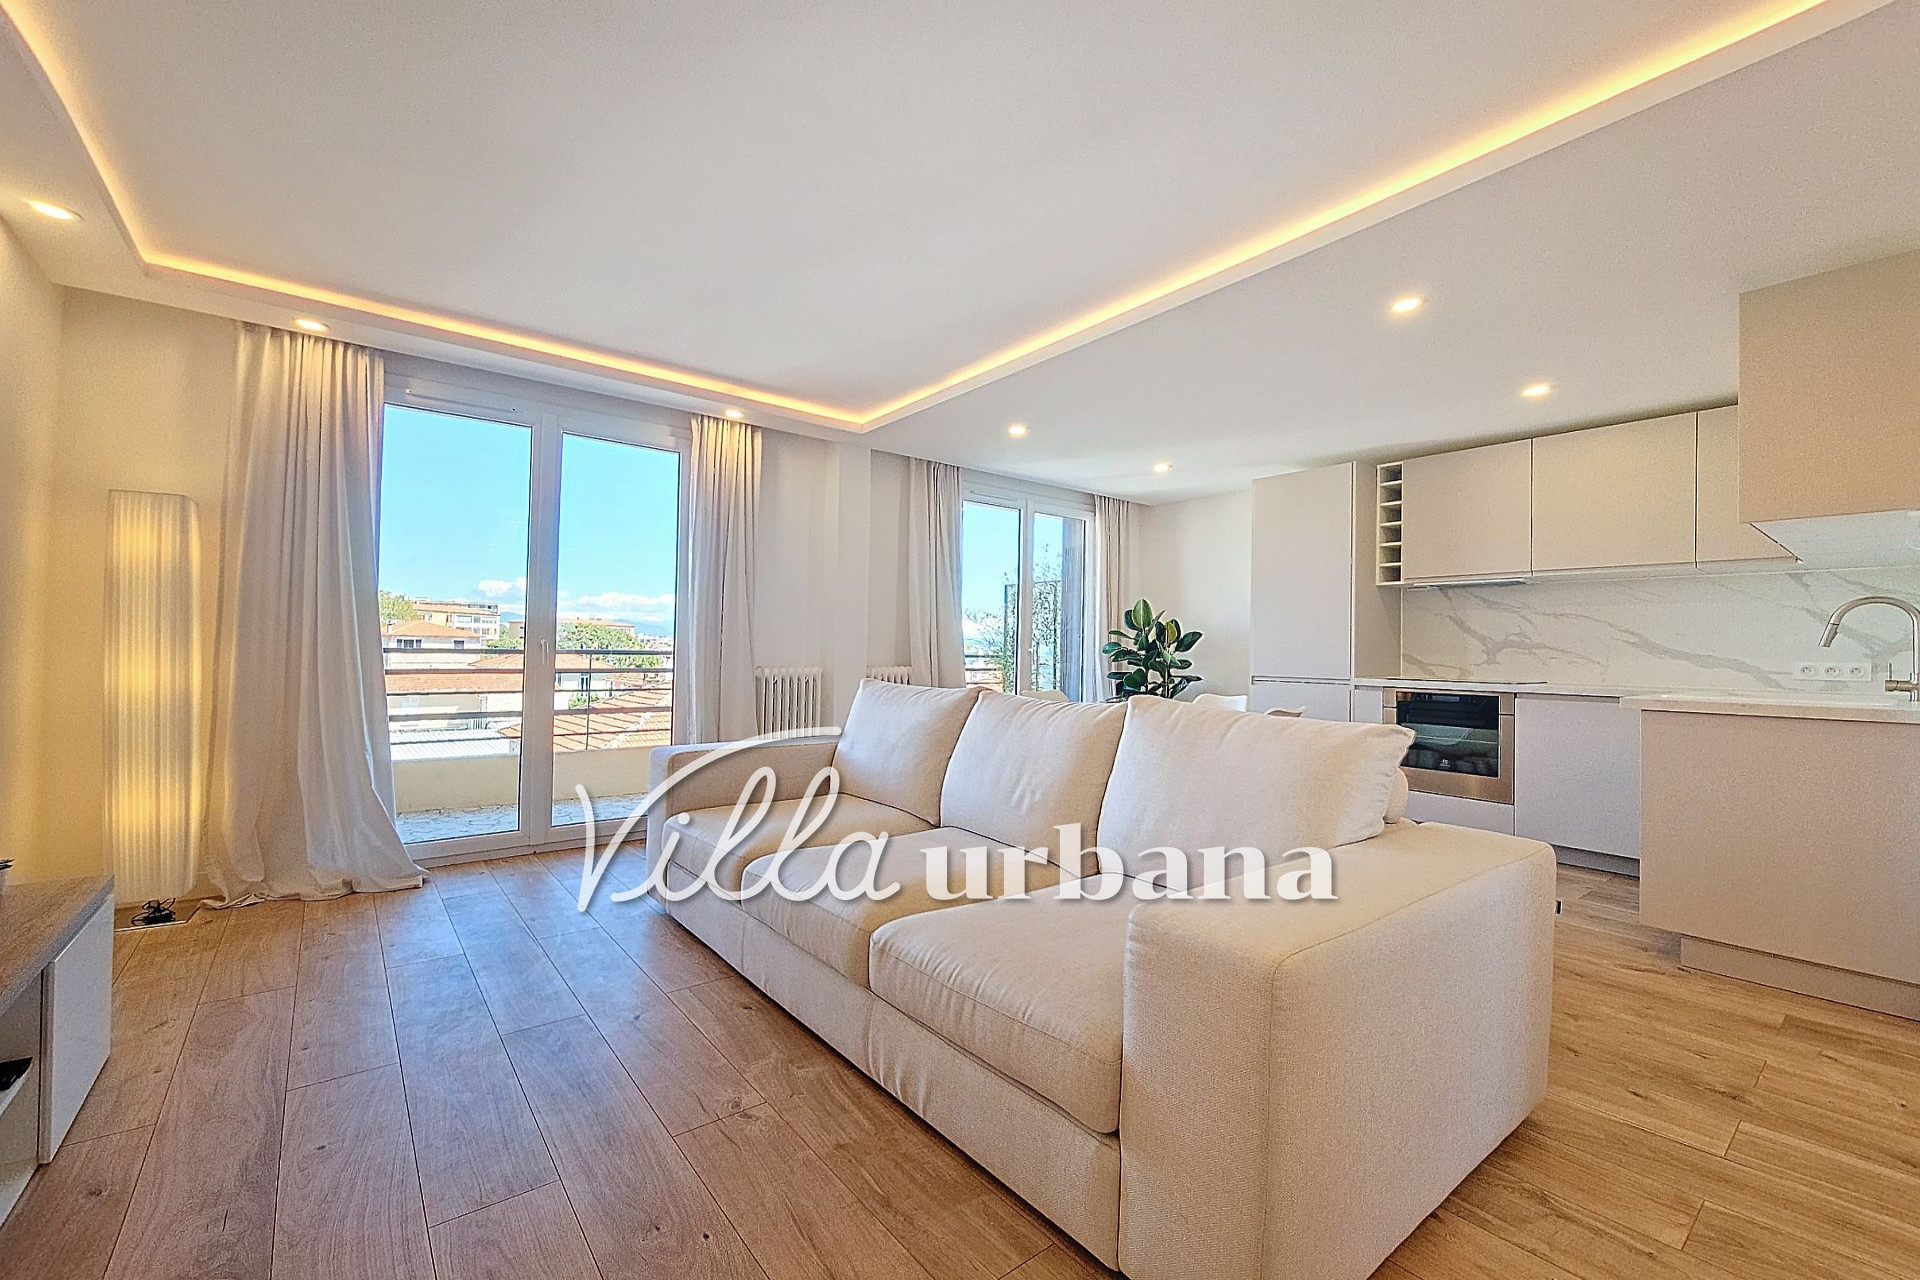 Vente Appartement 58m² à Antibes (06600) - Villa Urbana